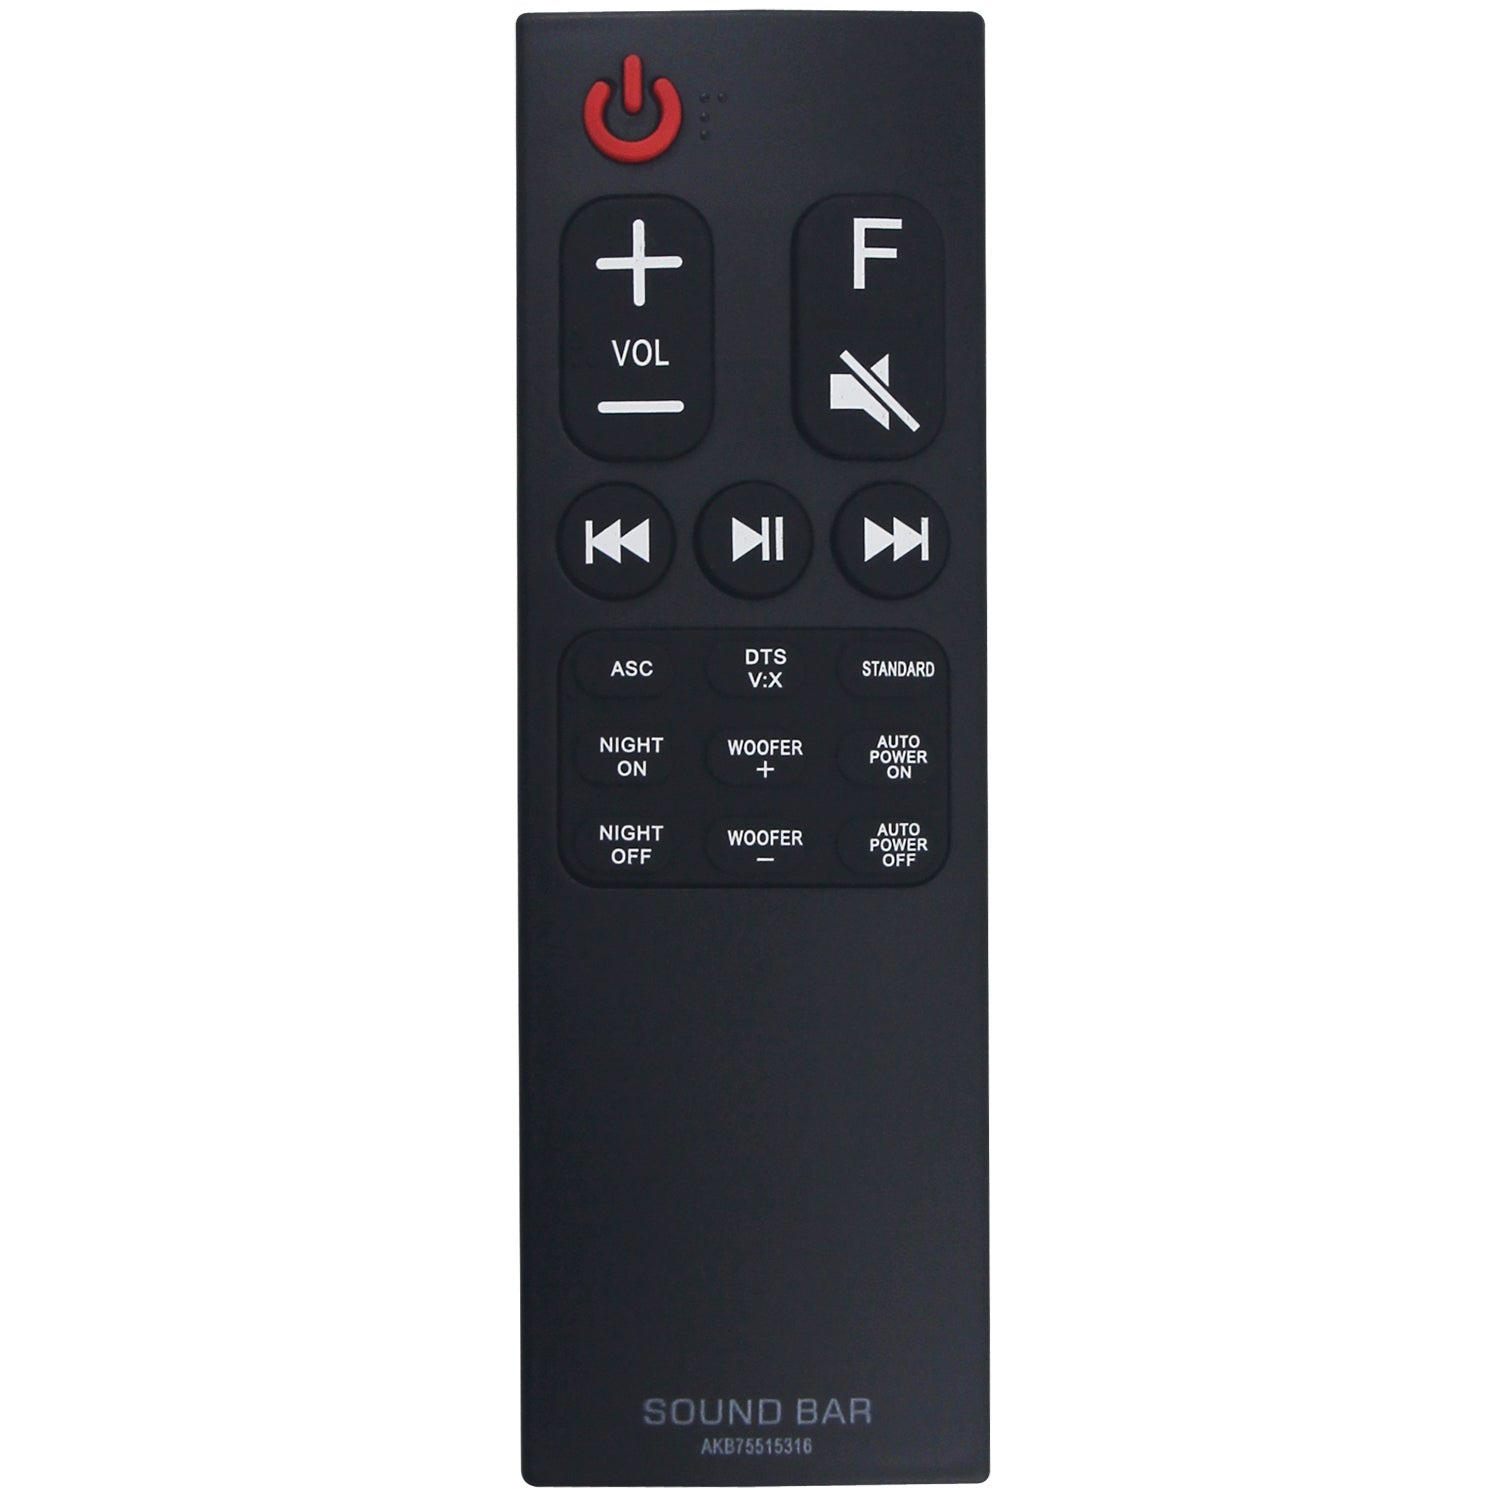 AKB75515316 Remote Control Replacement for LG Soundbar SK5 SK5Y